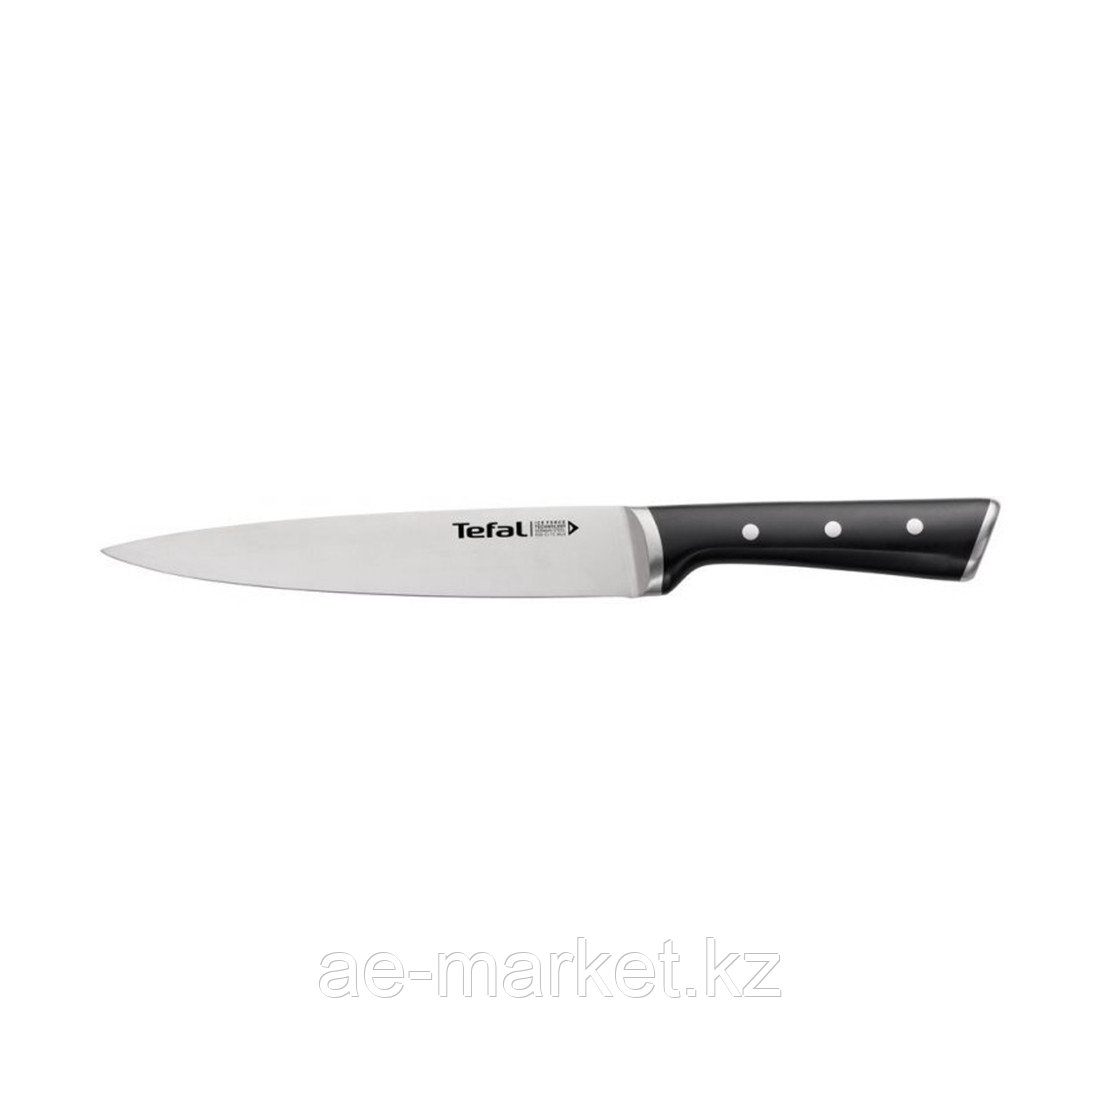 Нож для нарезки TEFAL K2320714, фото 1